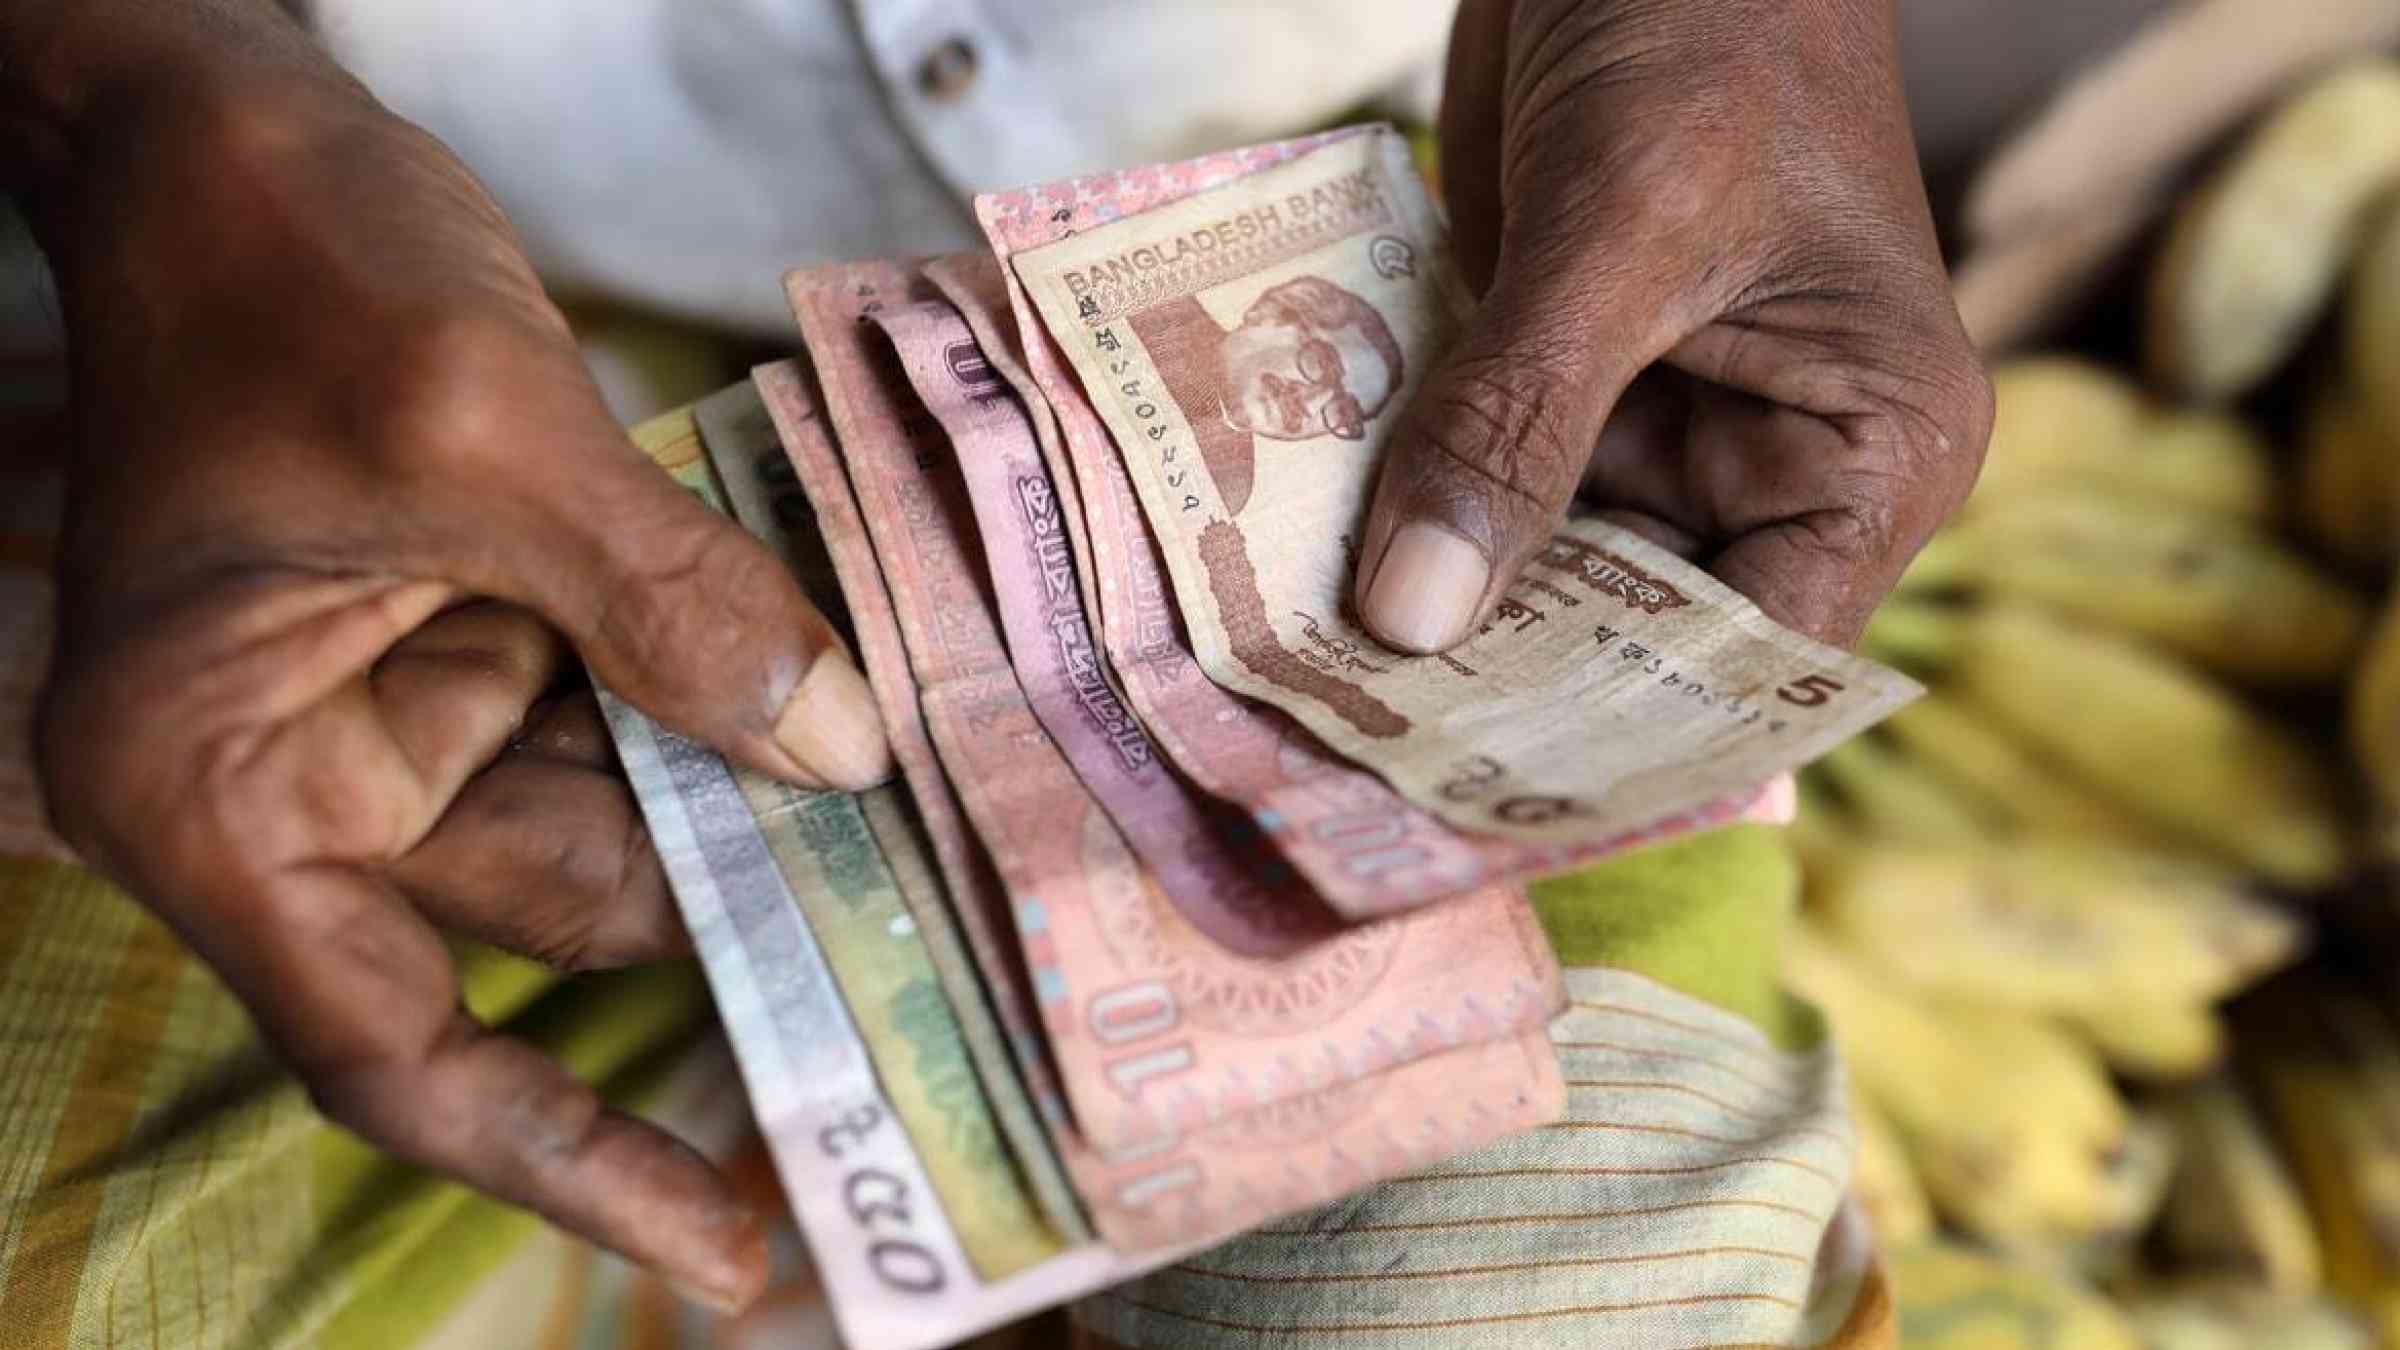 A Bangladeshi man counts money on hand